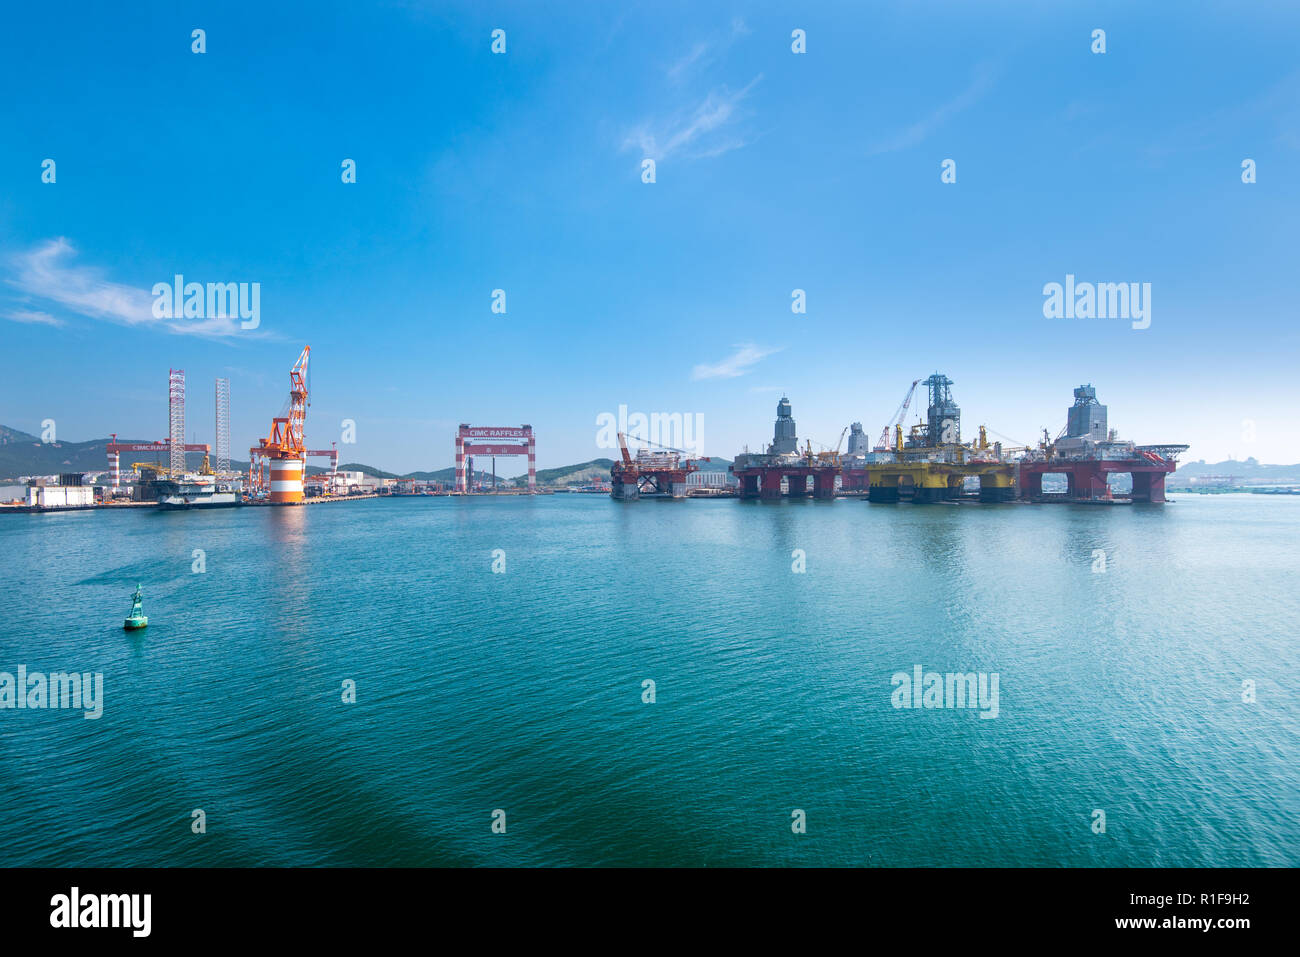 YANTAI, SHANDONG, CHINA - 21JUL2018: The CIMC Raffles Shipyard. To the right are several semisubmersible rigs owned by CIMC. Stock Photo